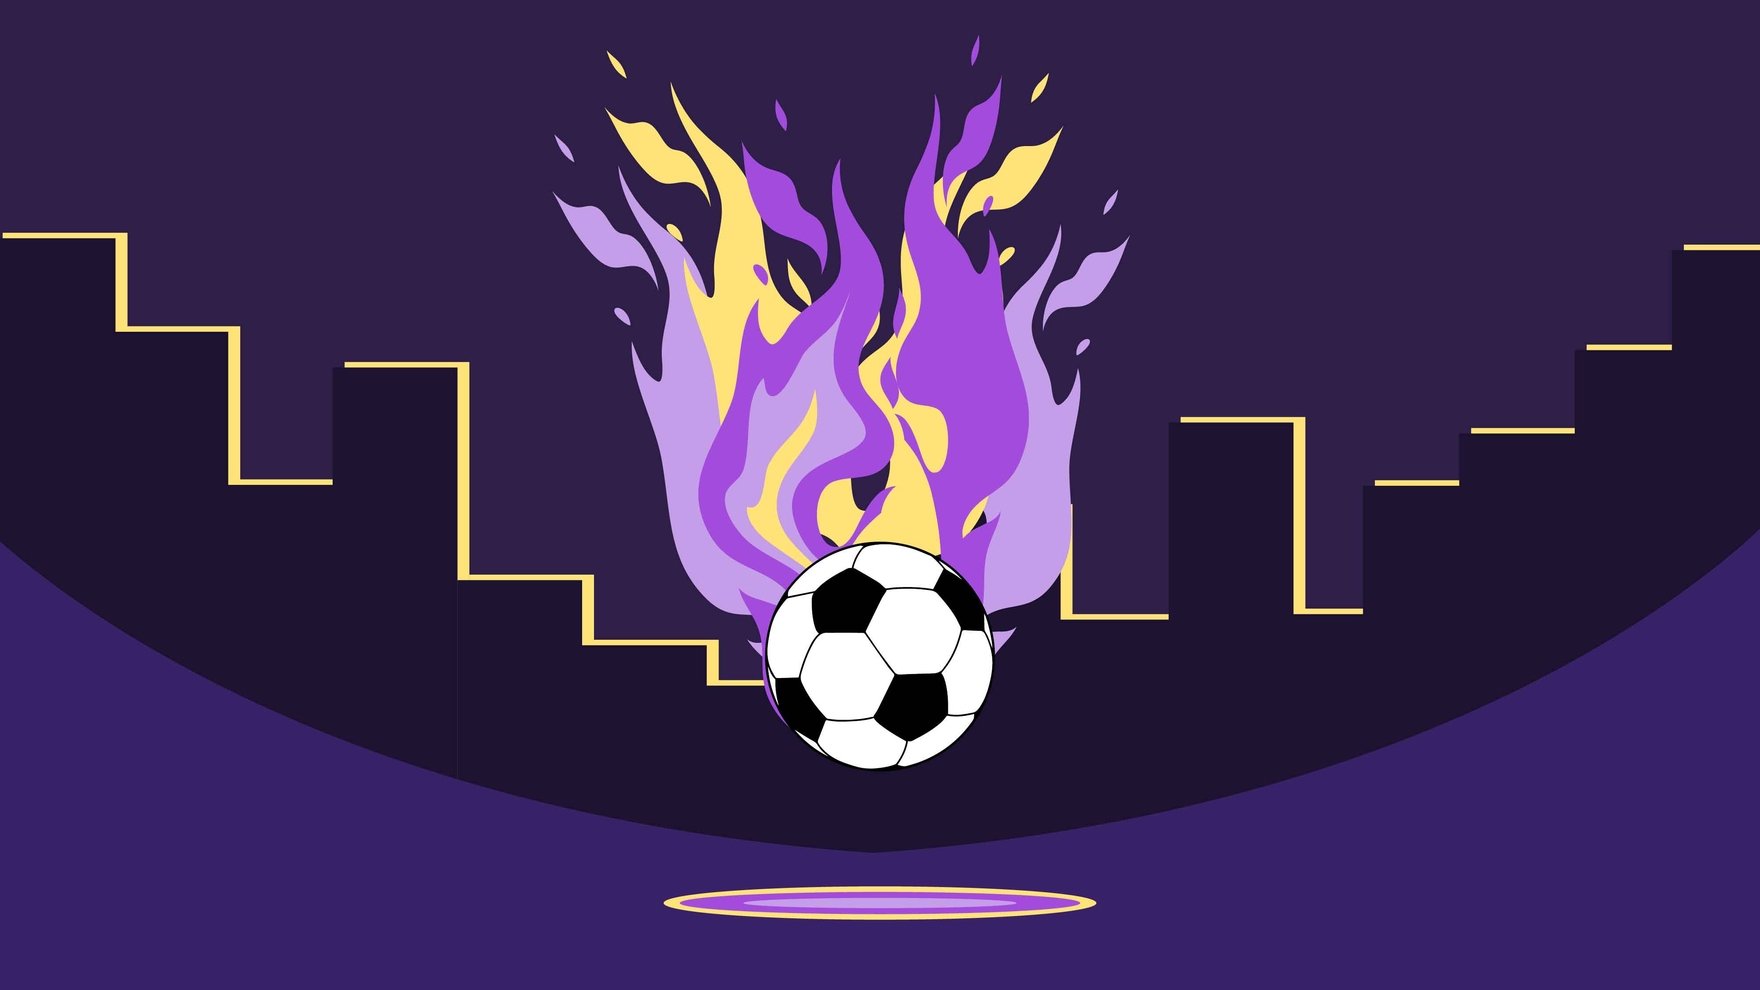 Free Fantasy Football Background in Illustrator, EPS, SVG, JPG, PNG